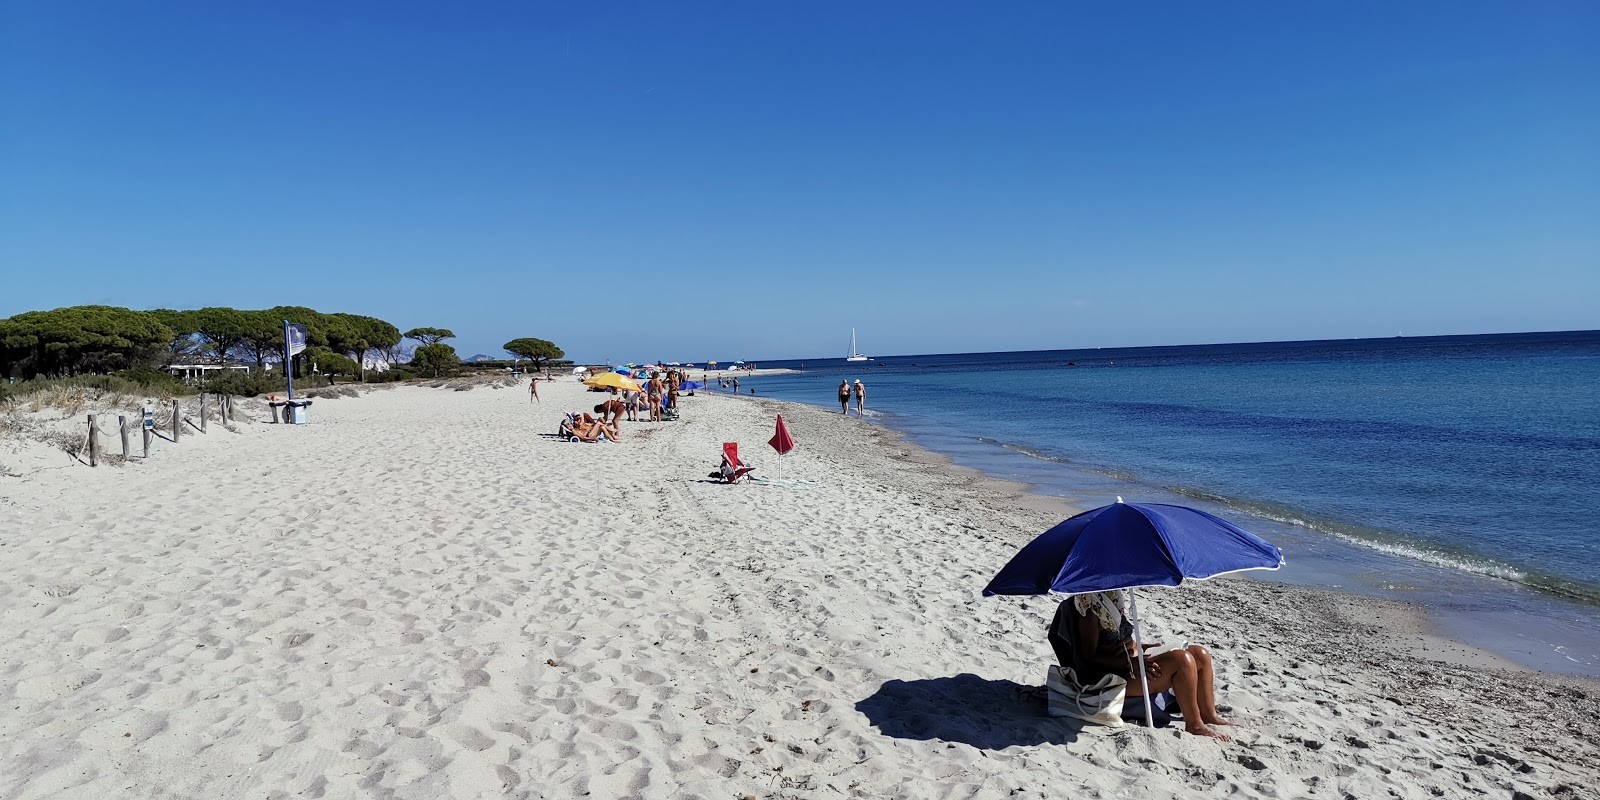 Foto de Spiaggia per Cani localizado em área natural